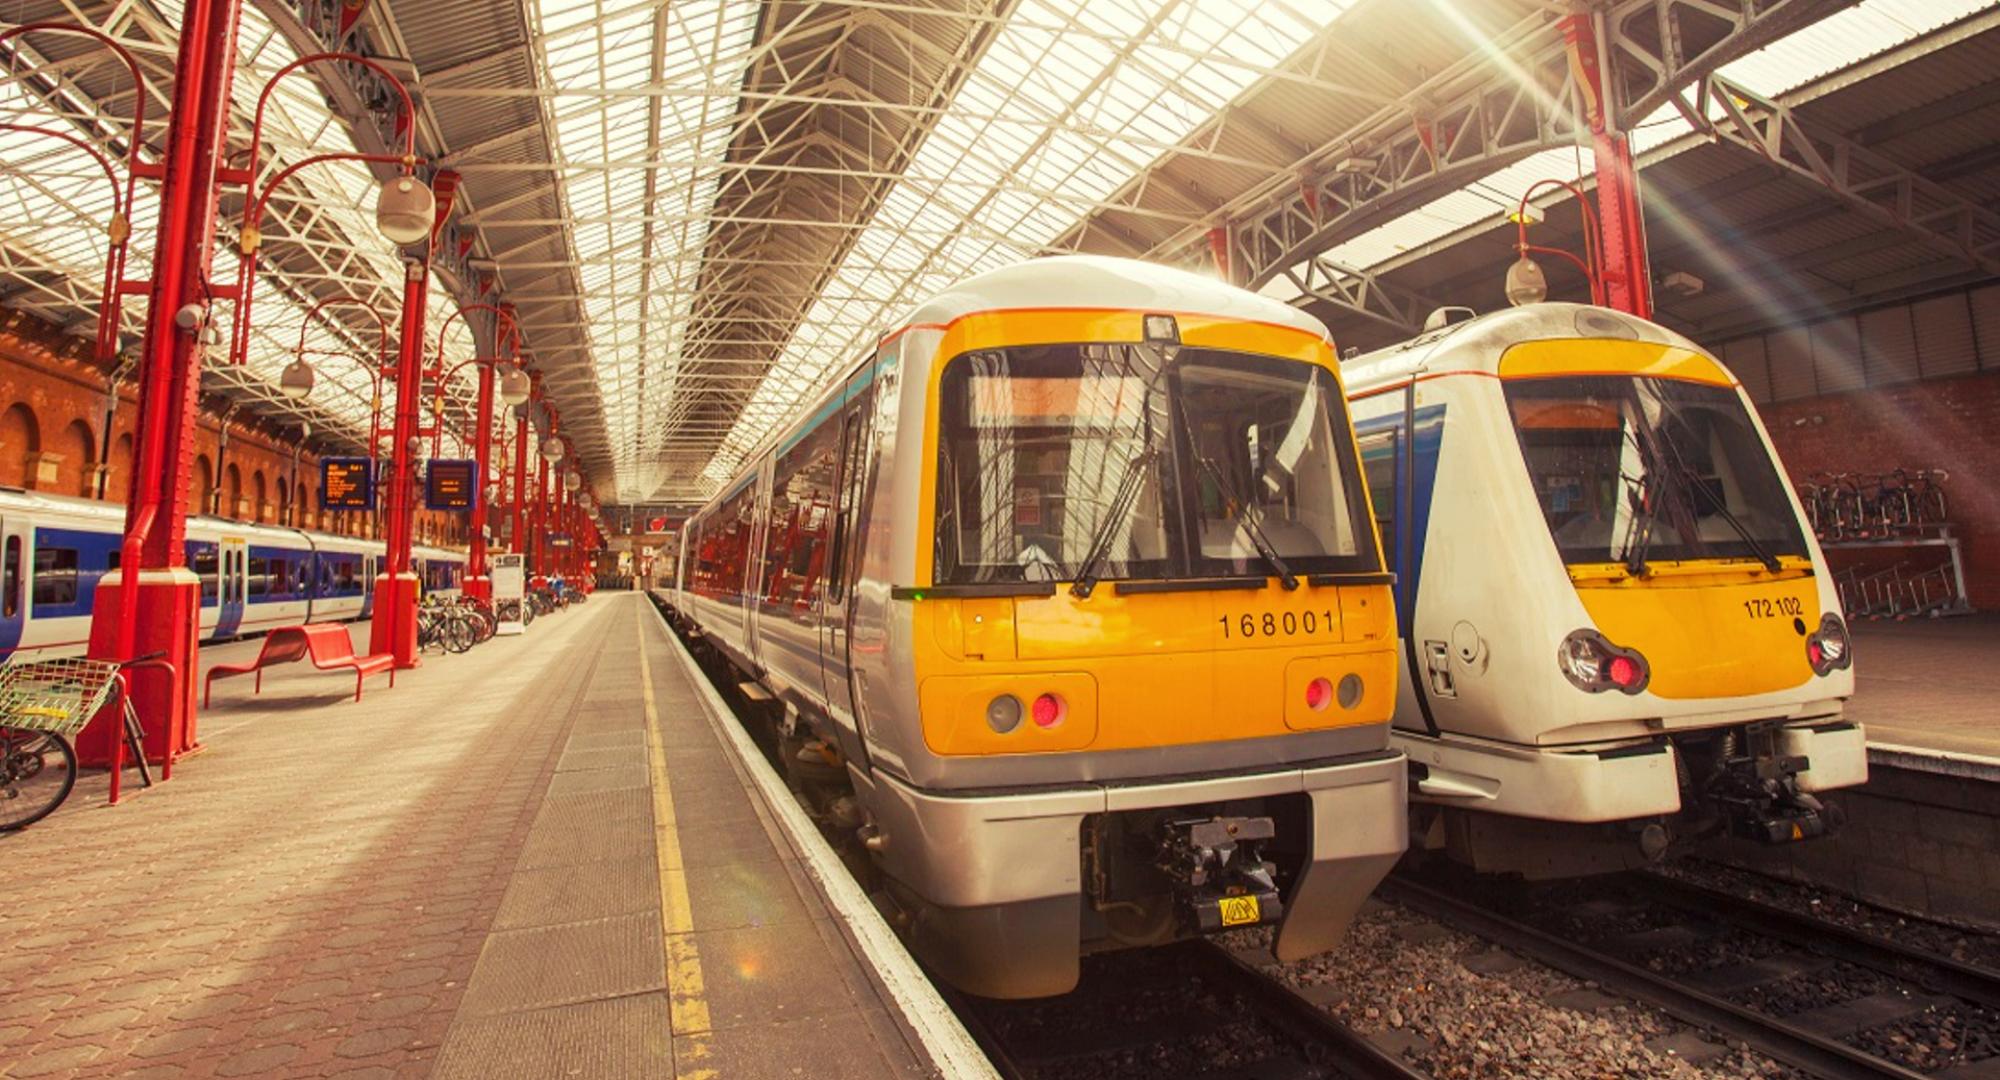 Chiltern trains at Marylebone station